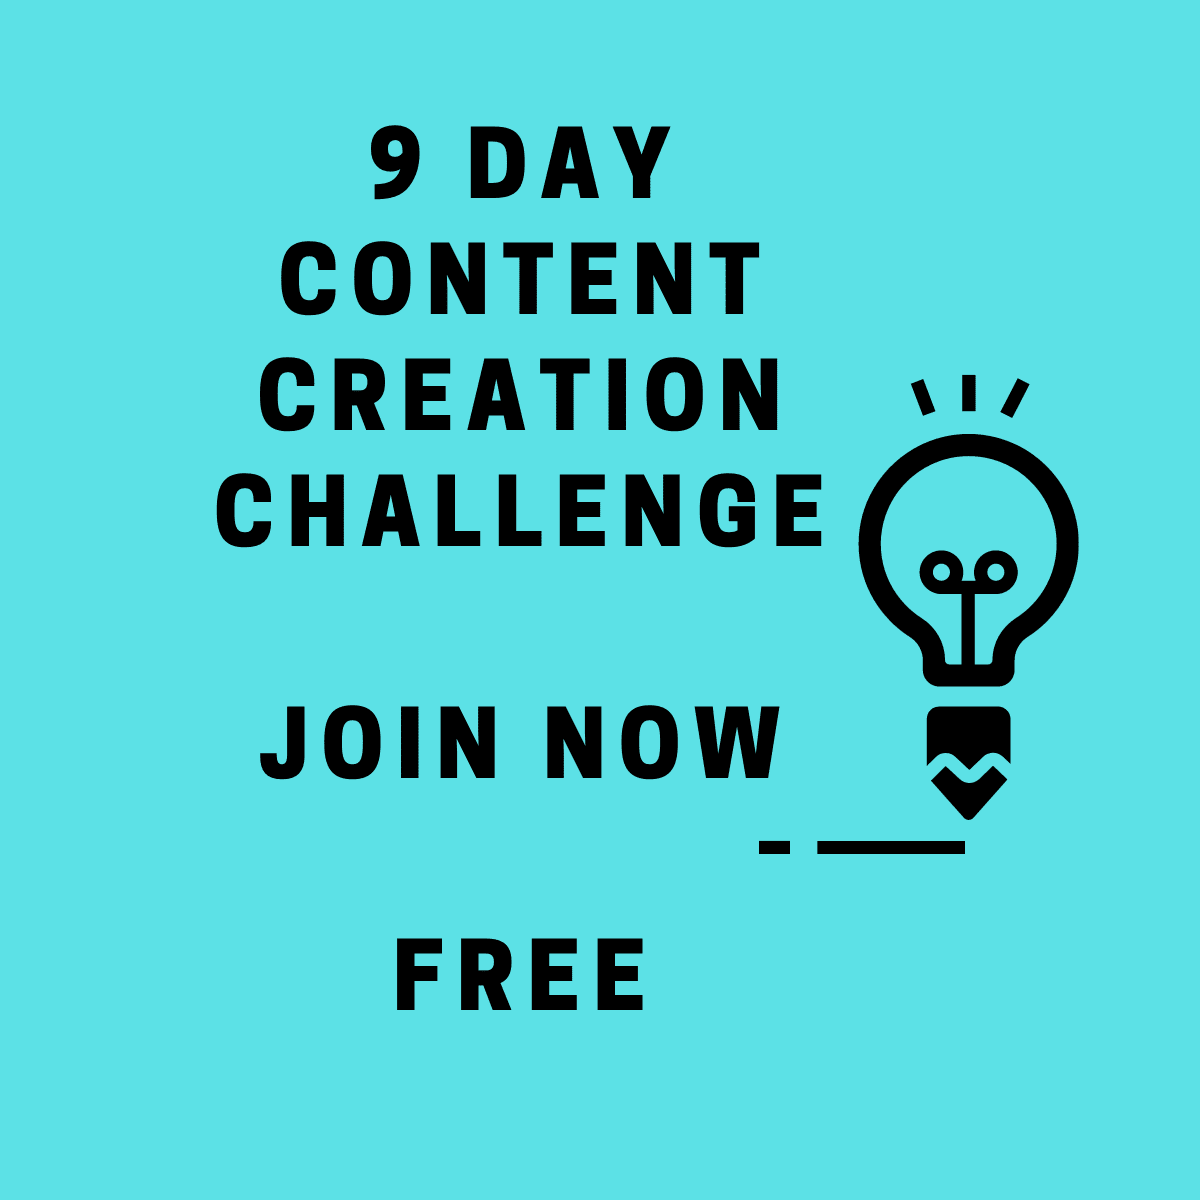 Understanding the 9-day content challenge